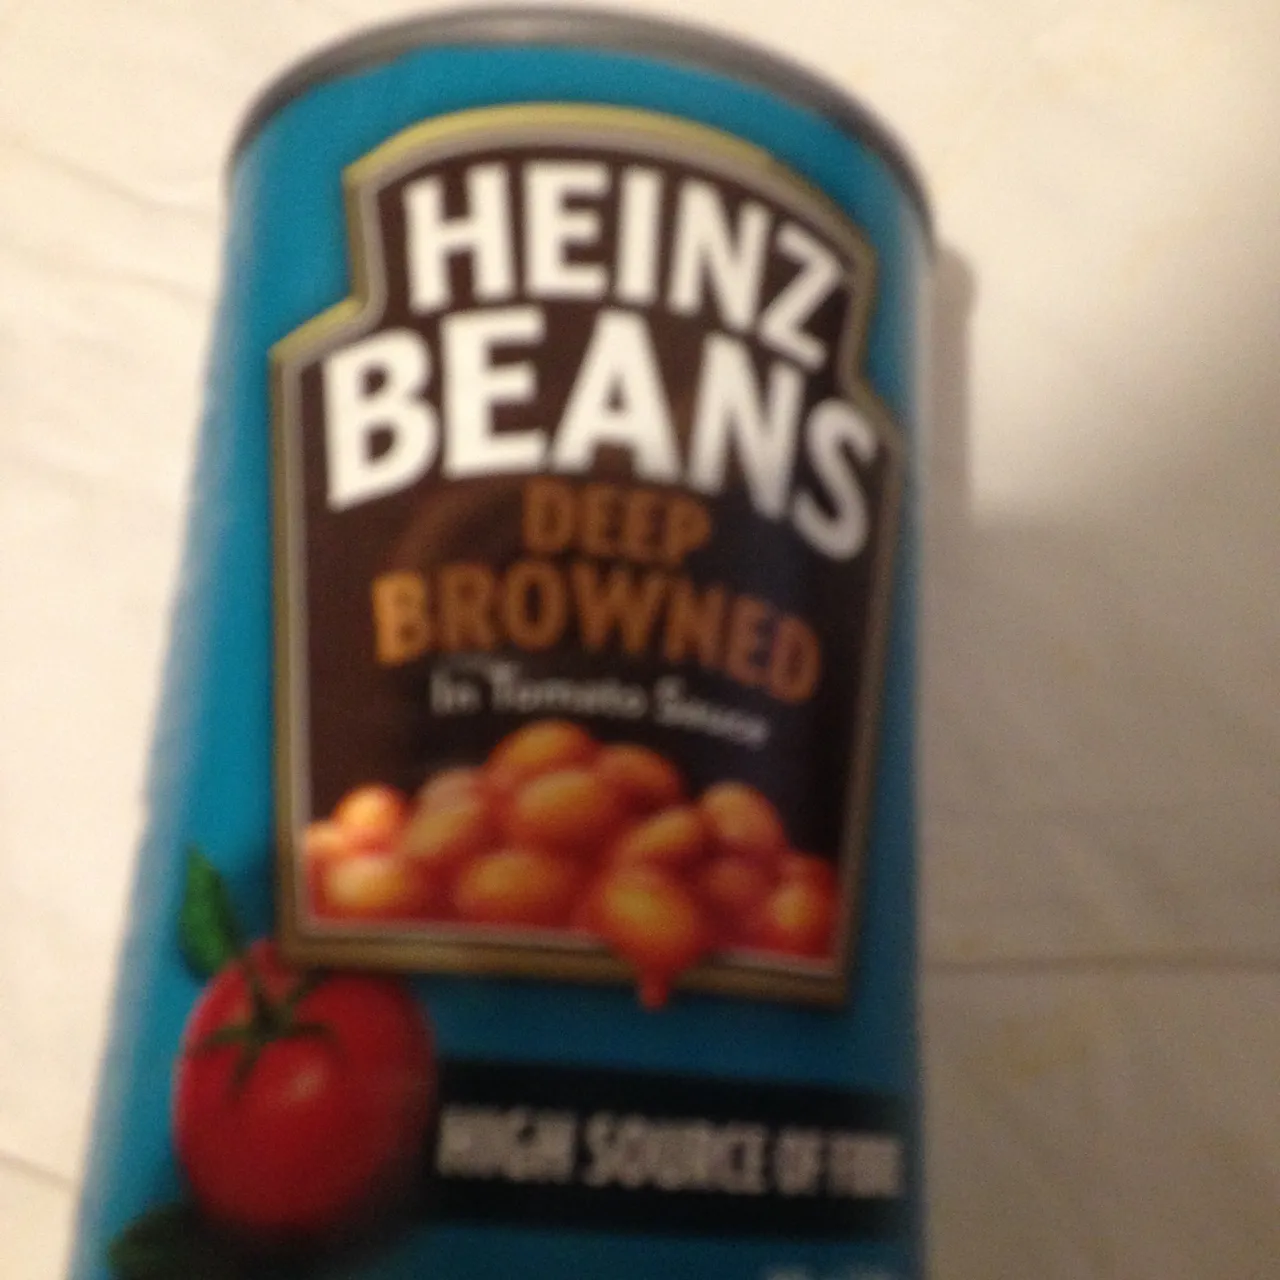 heinz beans photo 1